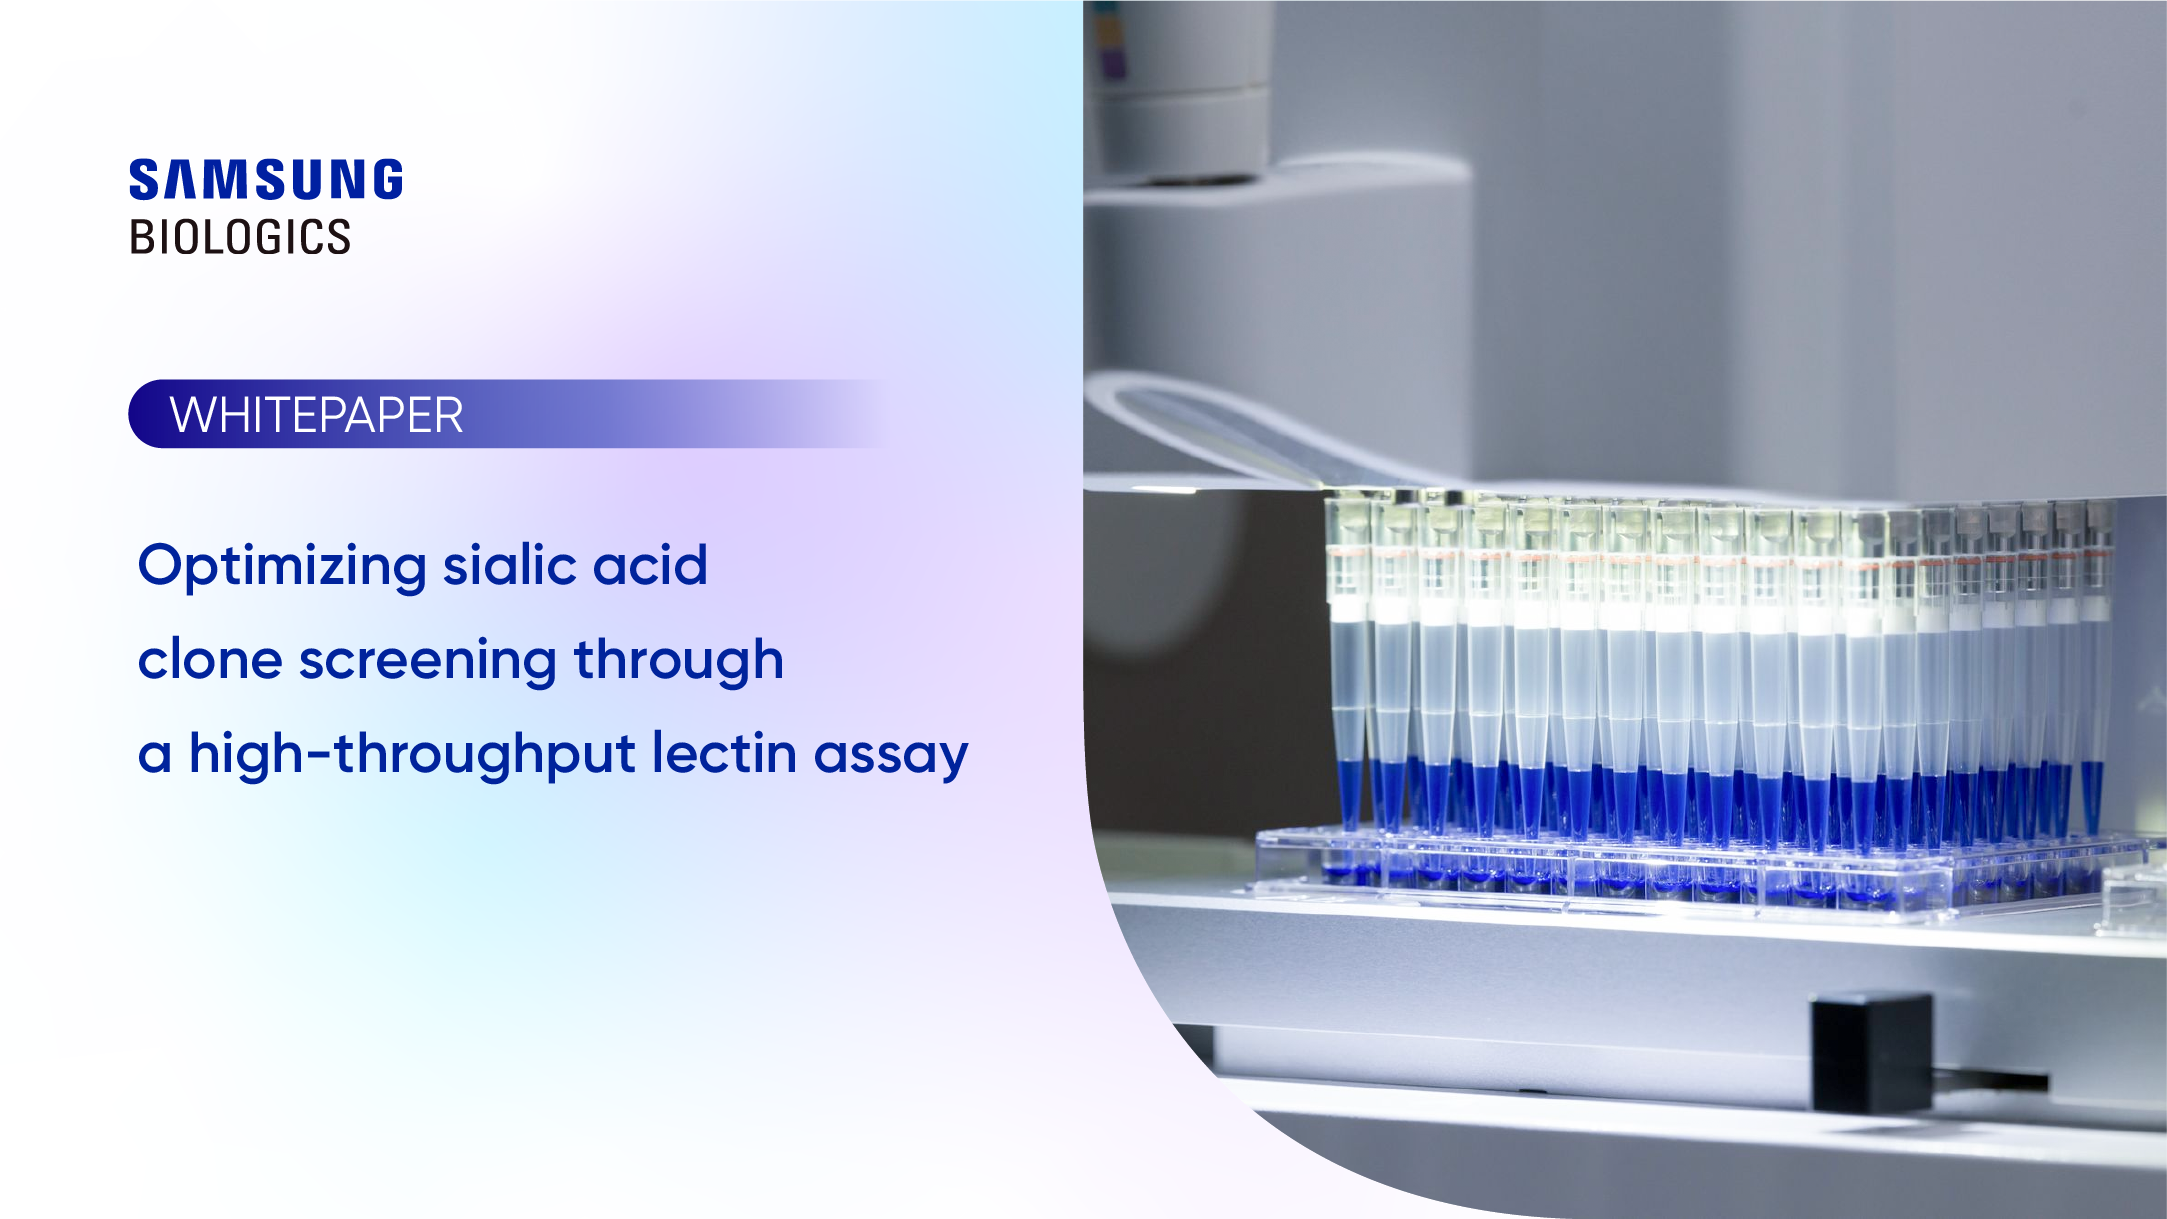 Optimizing sialic acid clone screening through a high throughput lectin assay